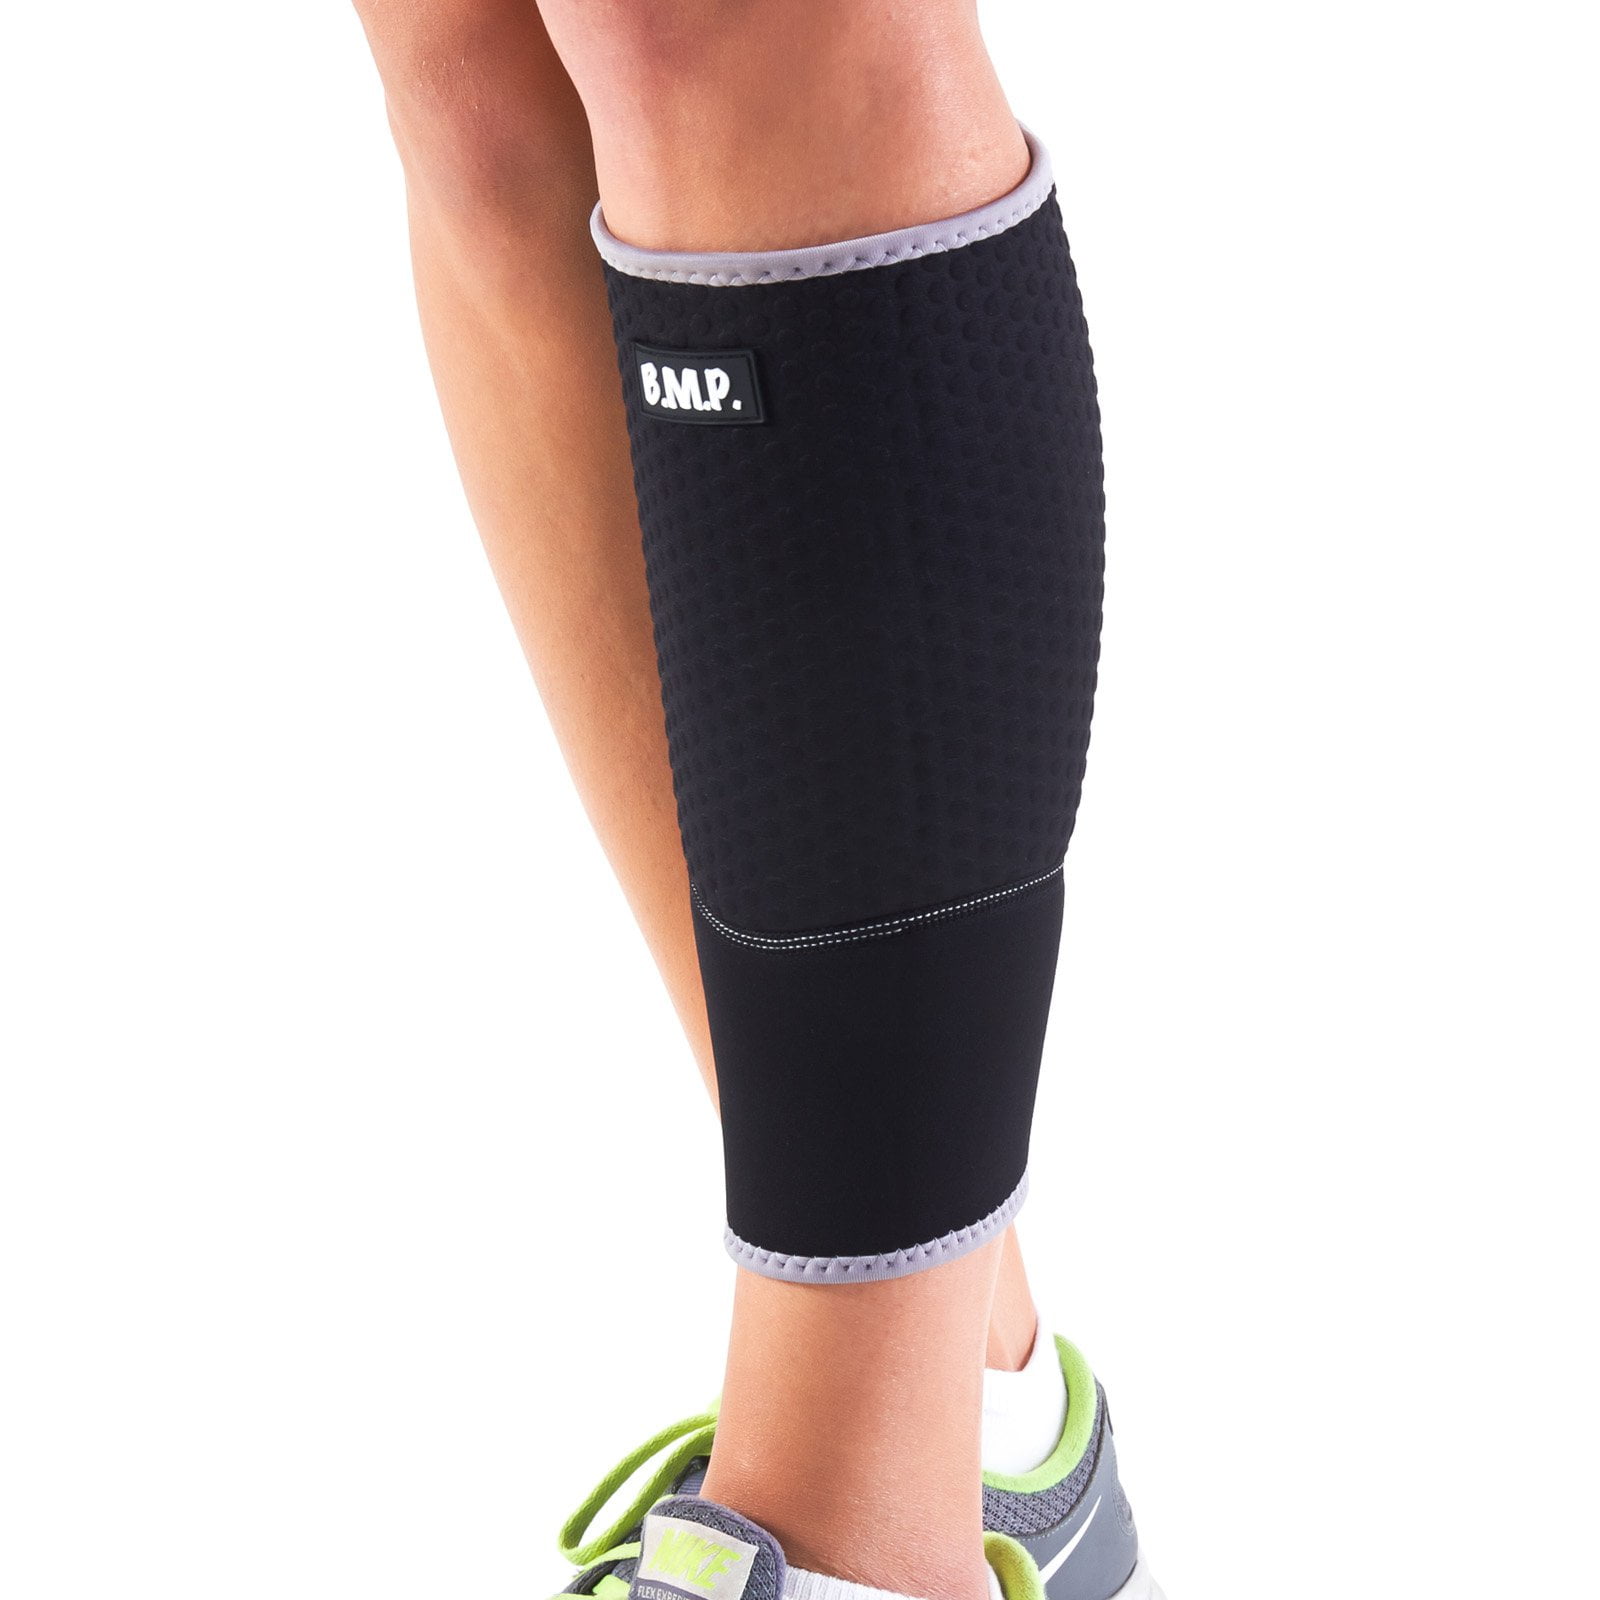 Knee Brace / Compression Sleeve - Therapeutic Warming Sensation